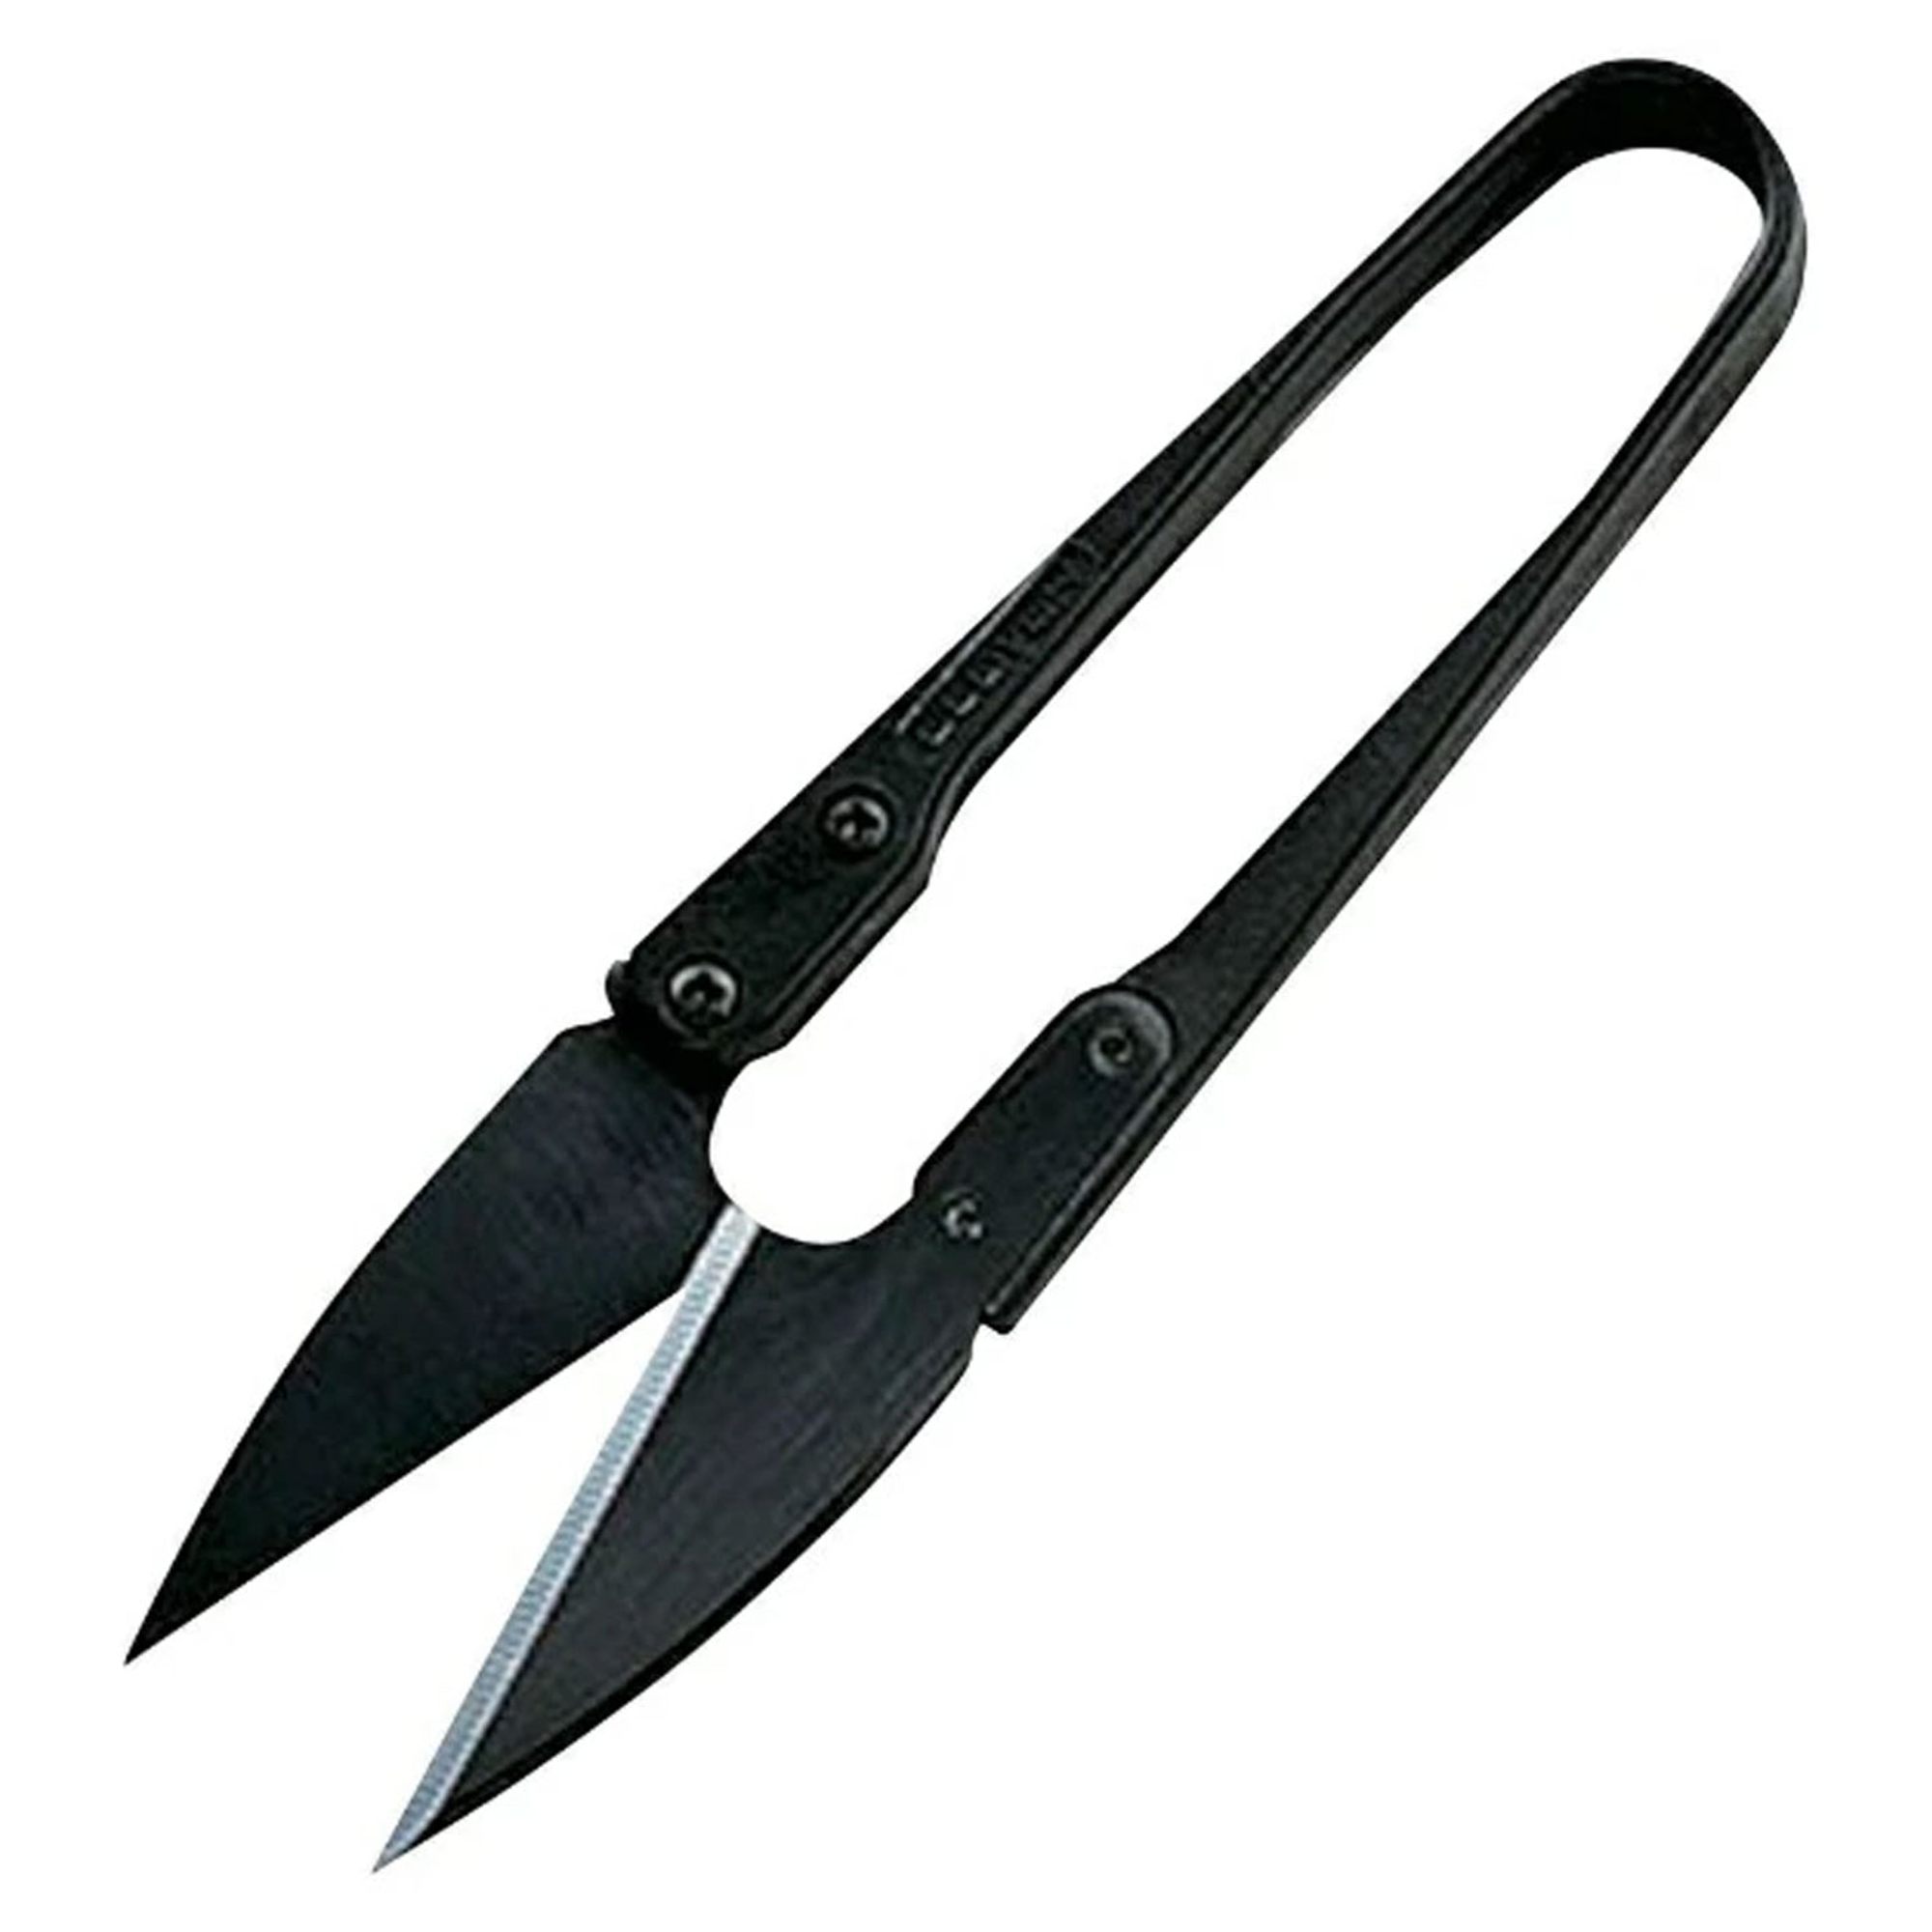  LNKA Sewing Scissors for Fabric Black - Professional